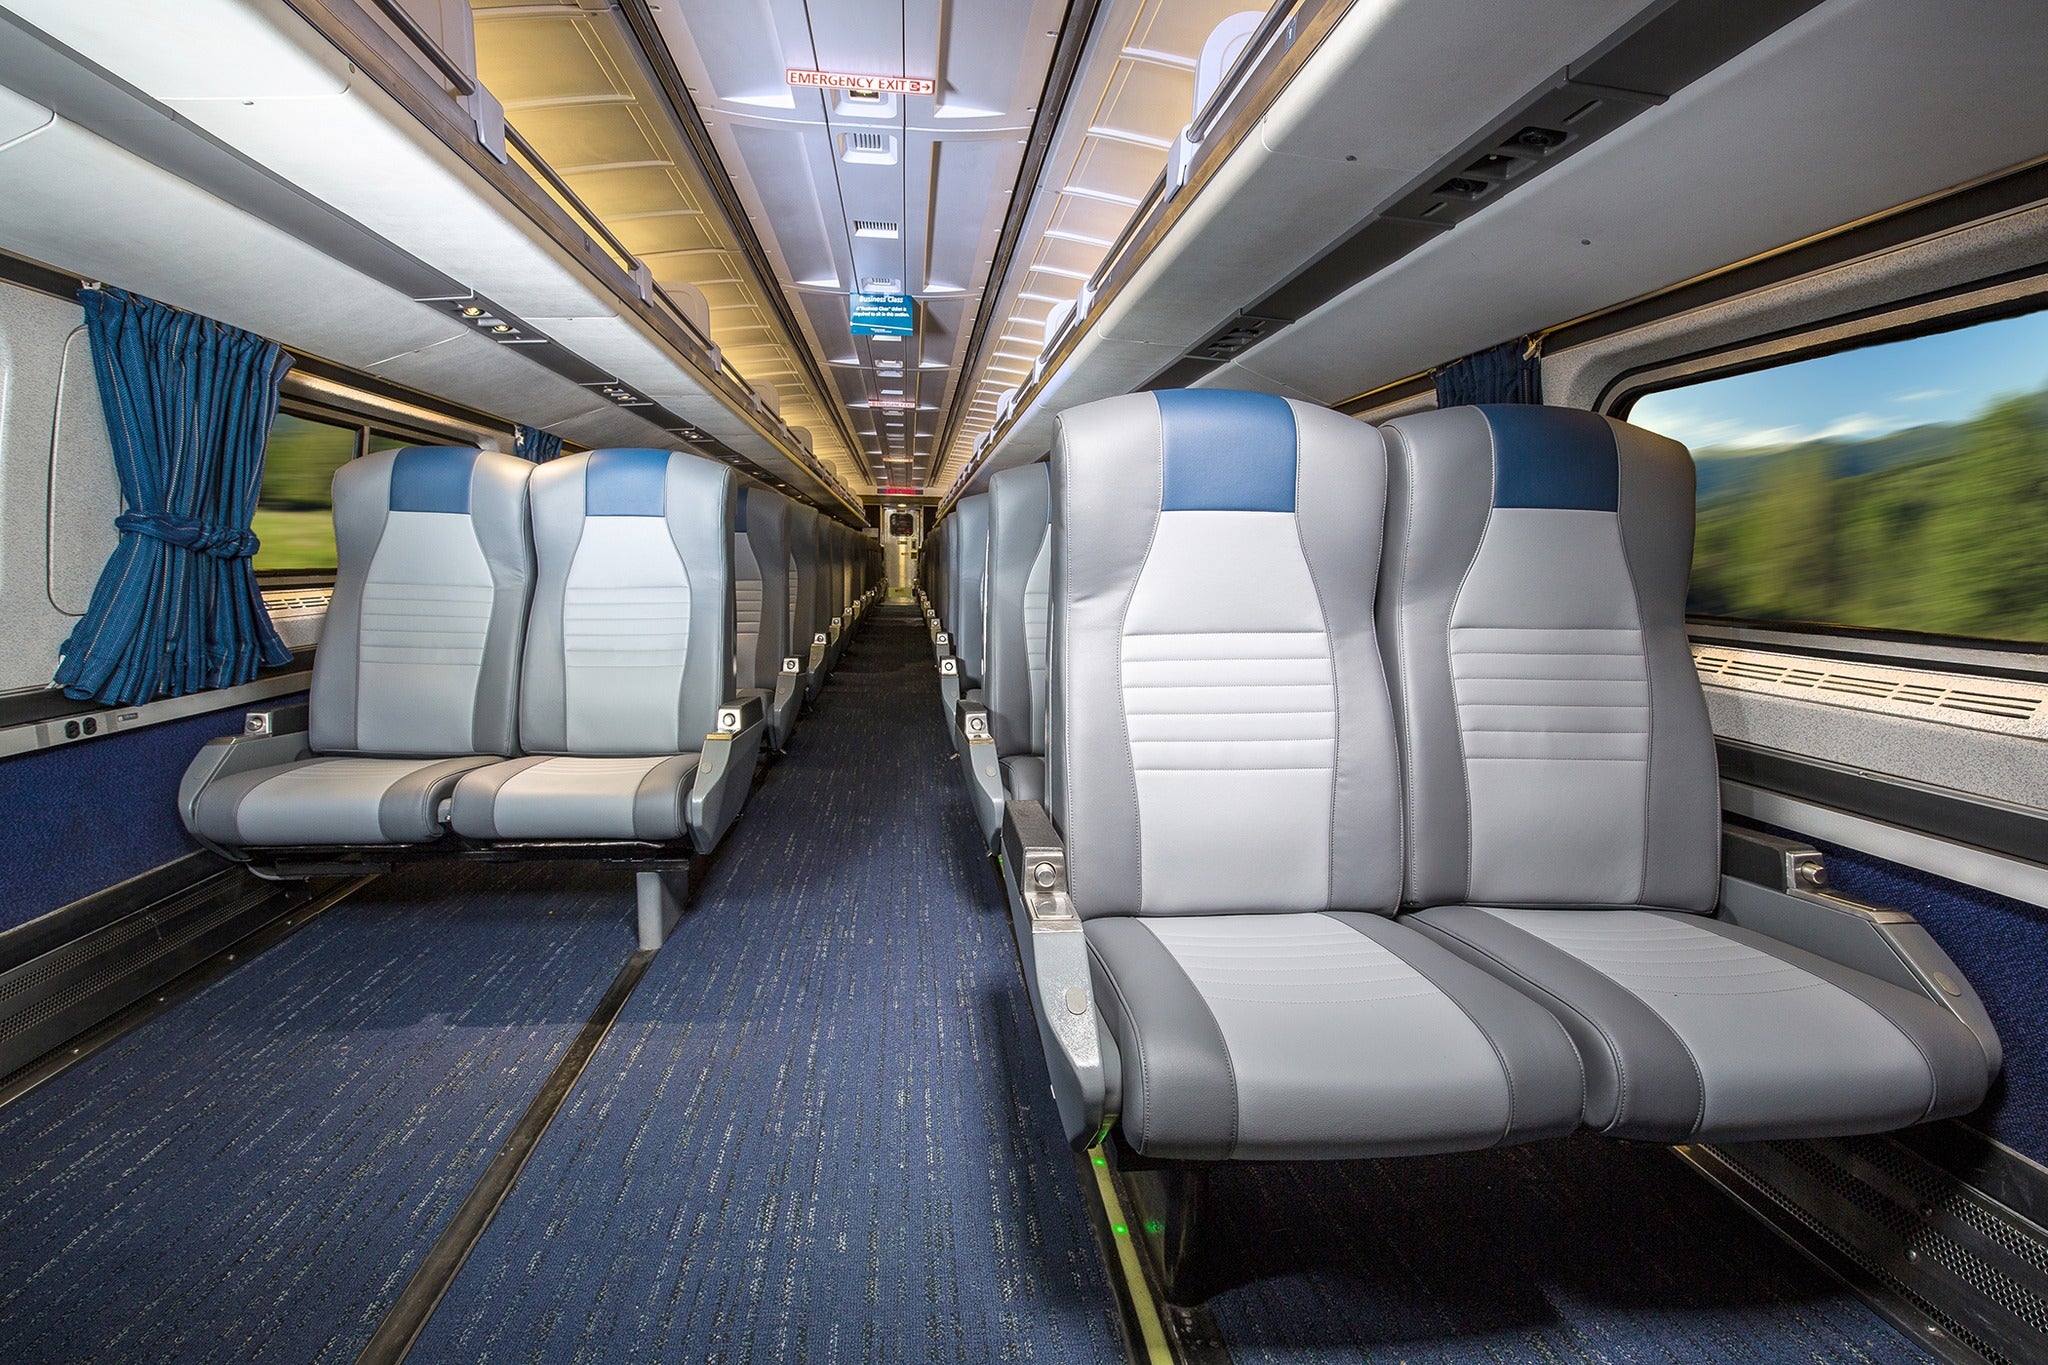 Amtrak coach seating